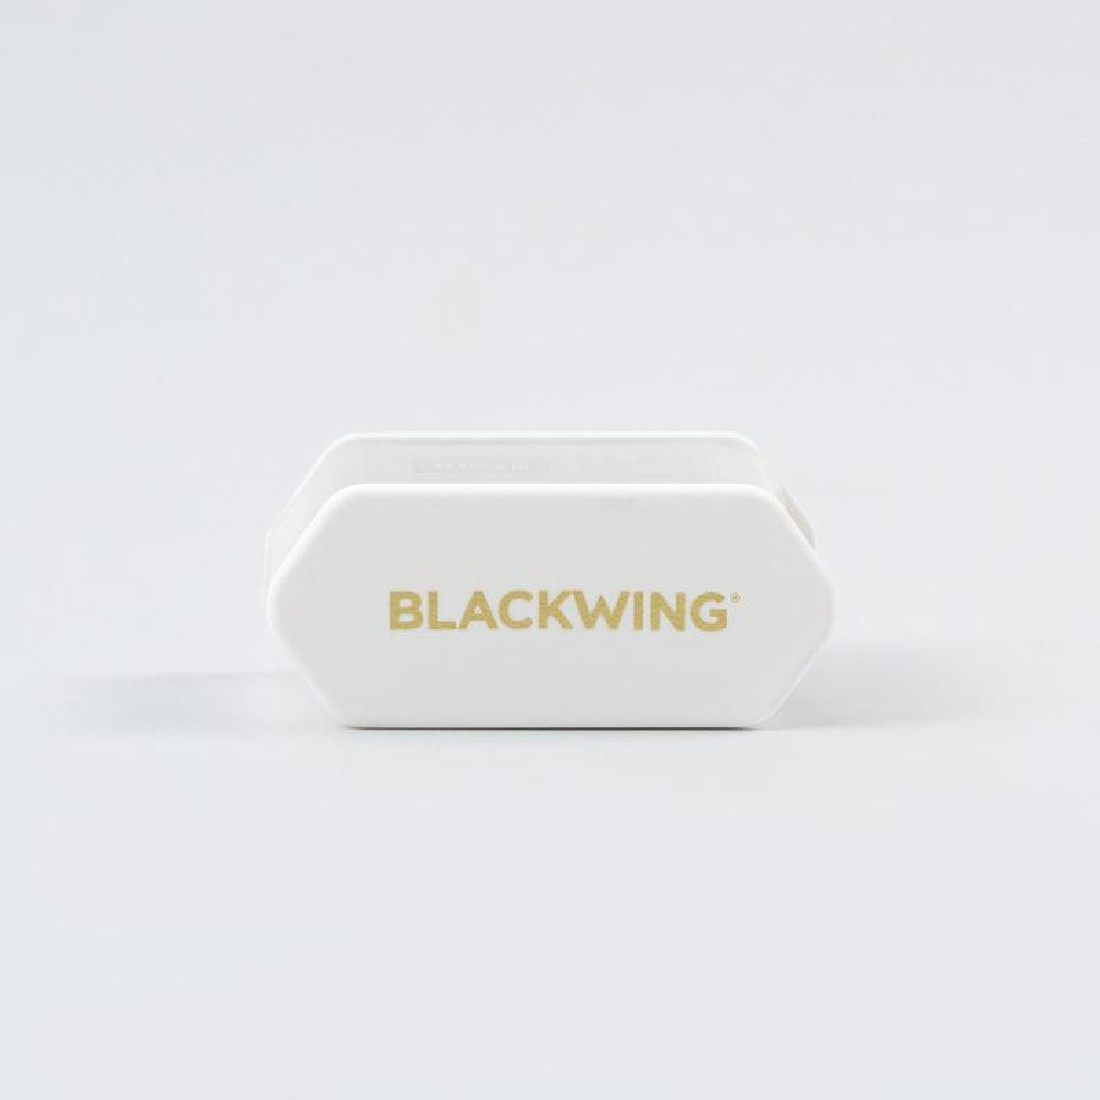 Blackwing Two-Step Long Point Sharpener White